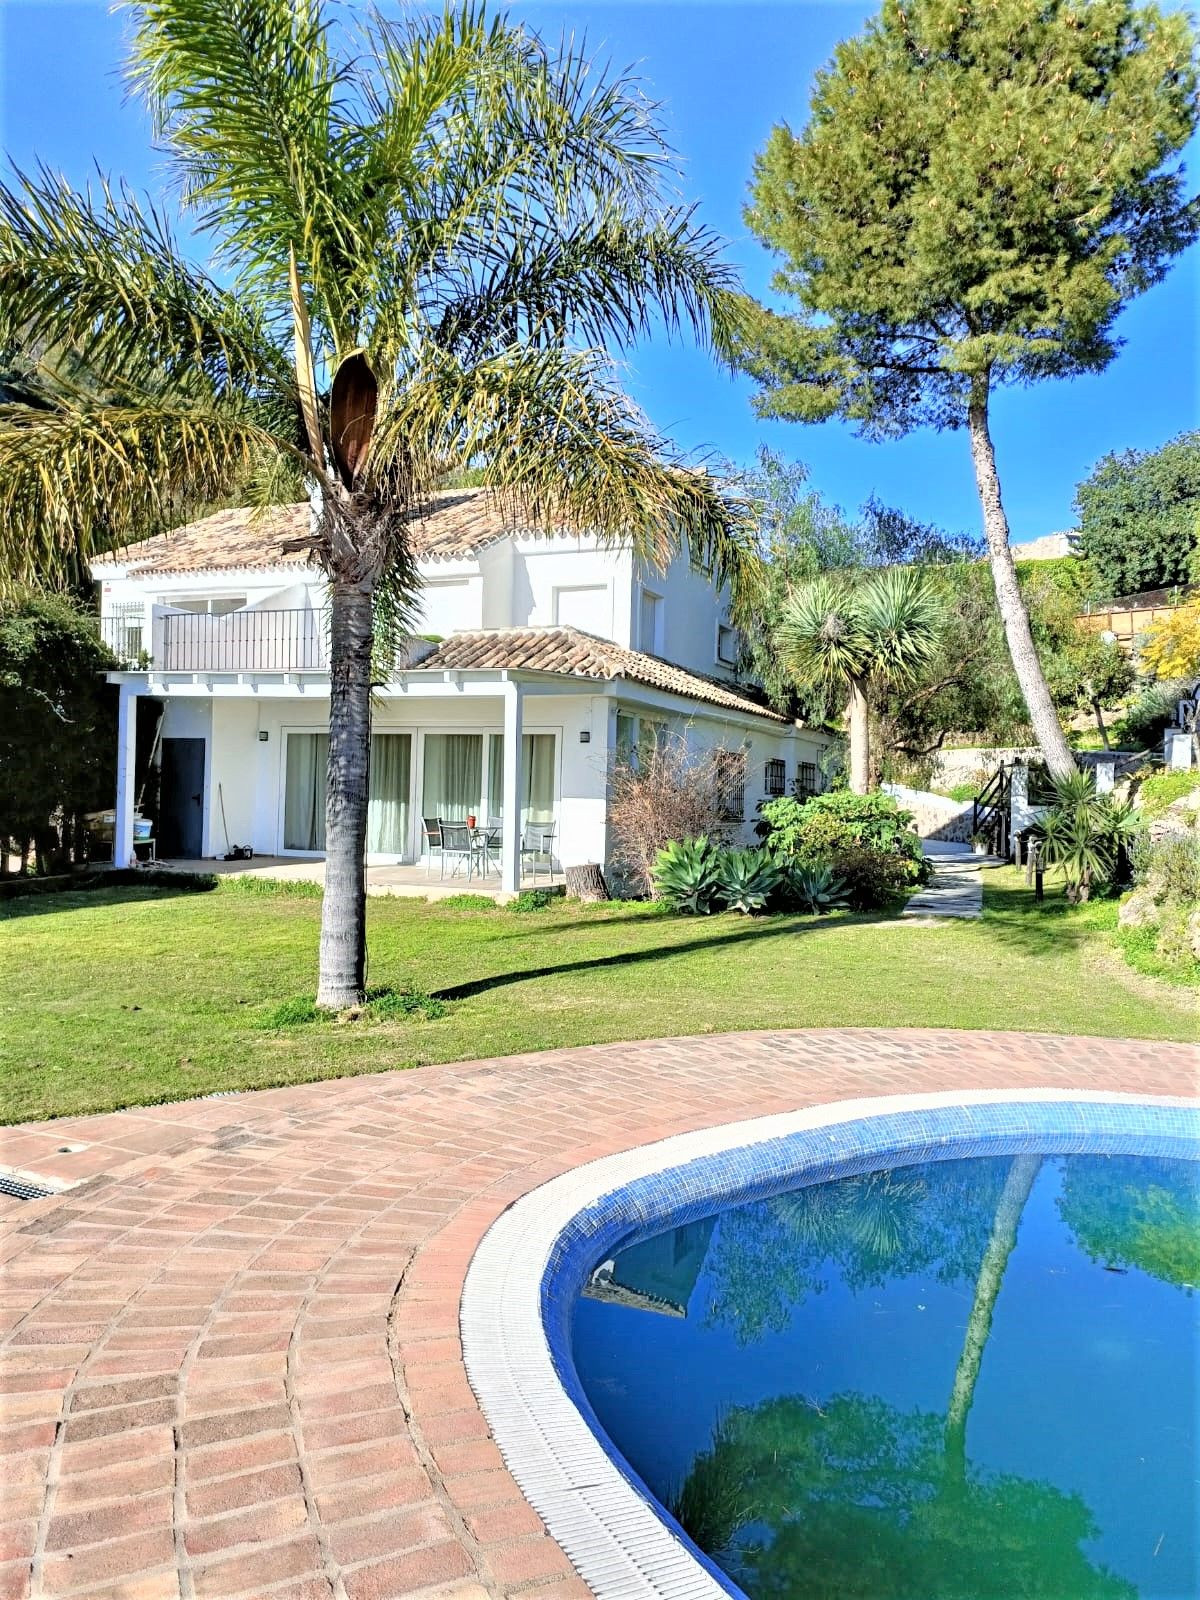 Semi-Detached House for sale in Ojén, Costa del Sol